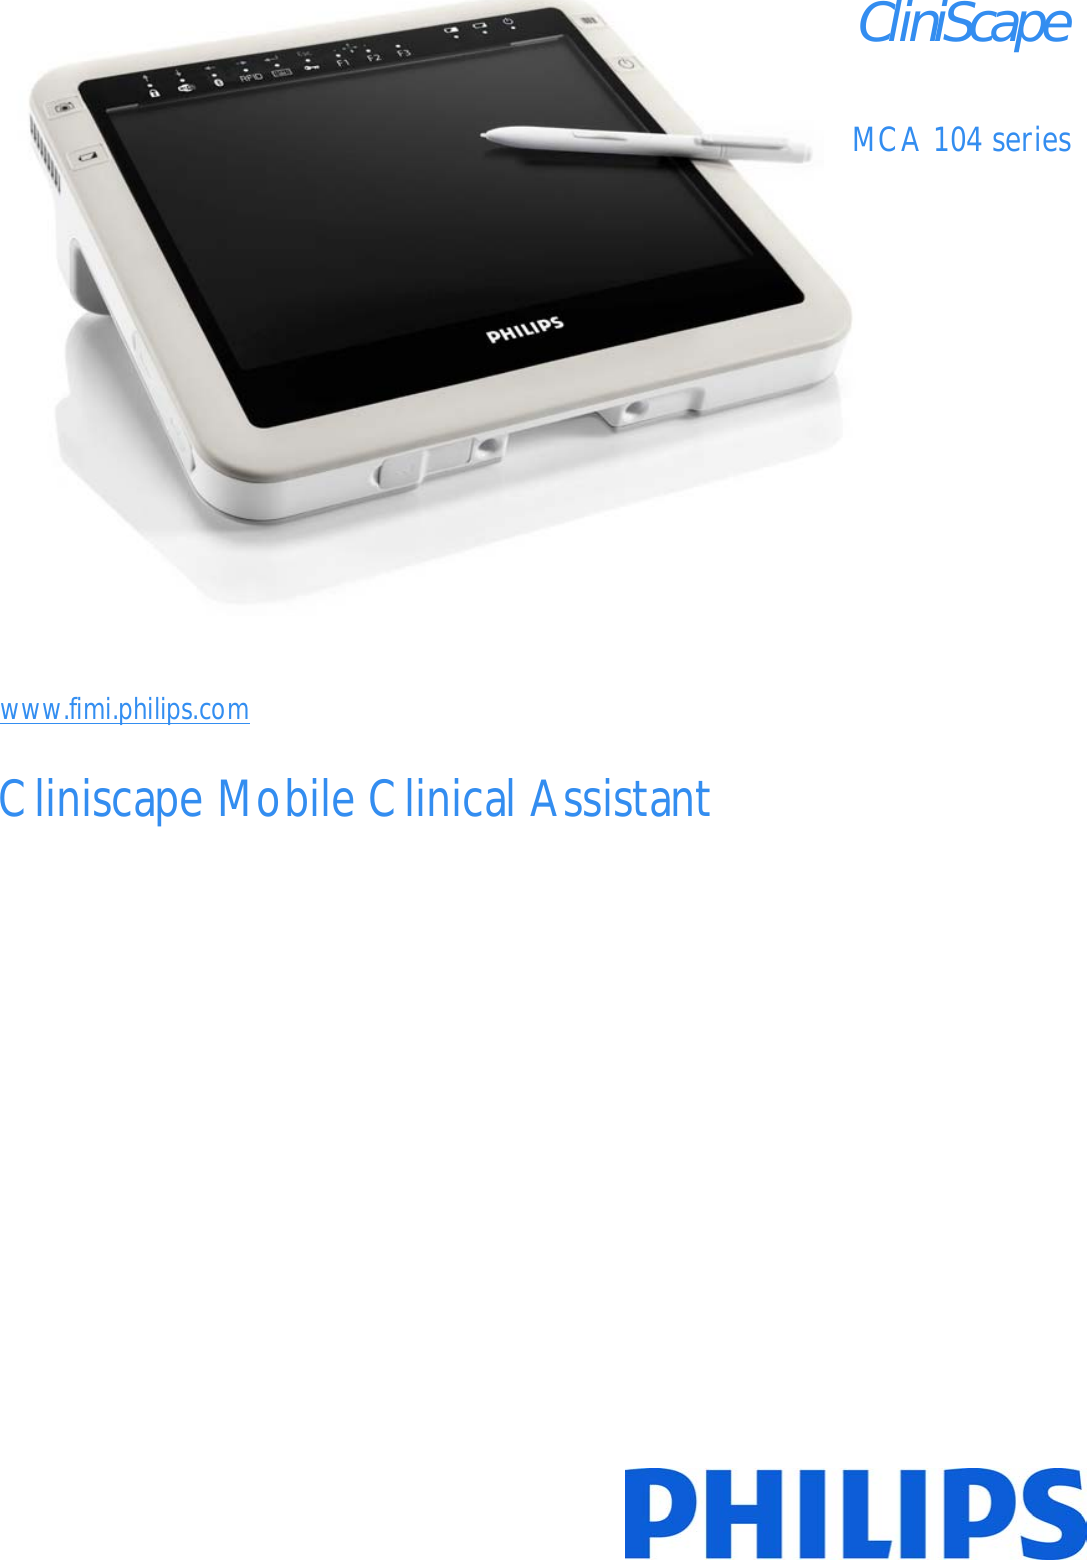                                    CliniScape  MCA 104 series www.fimi.philips.com Cliniscape Mobile Clinical Assistant